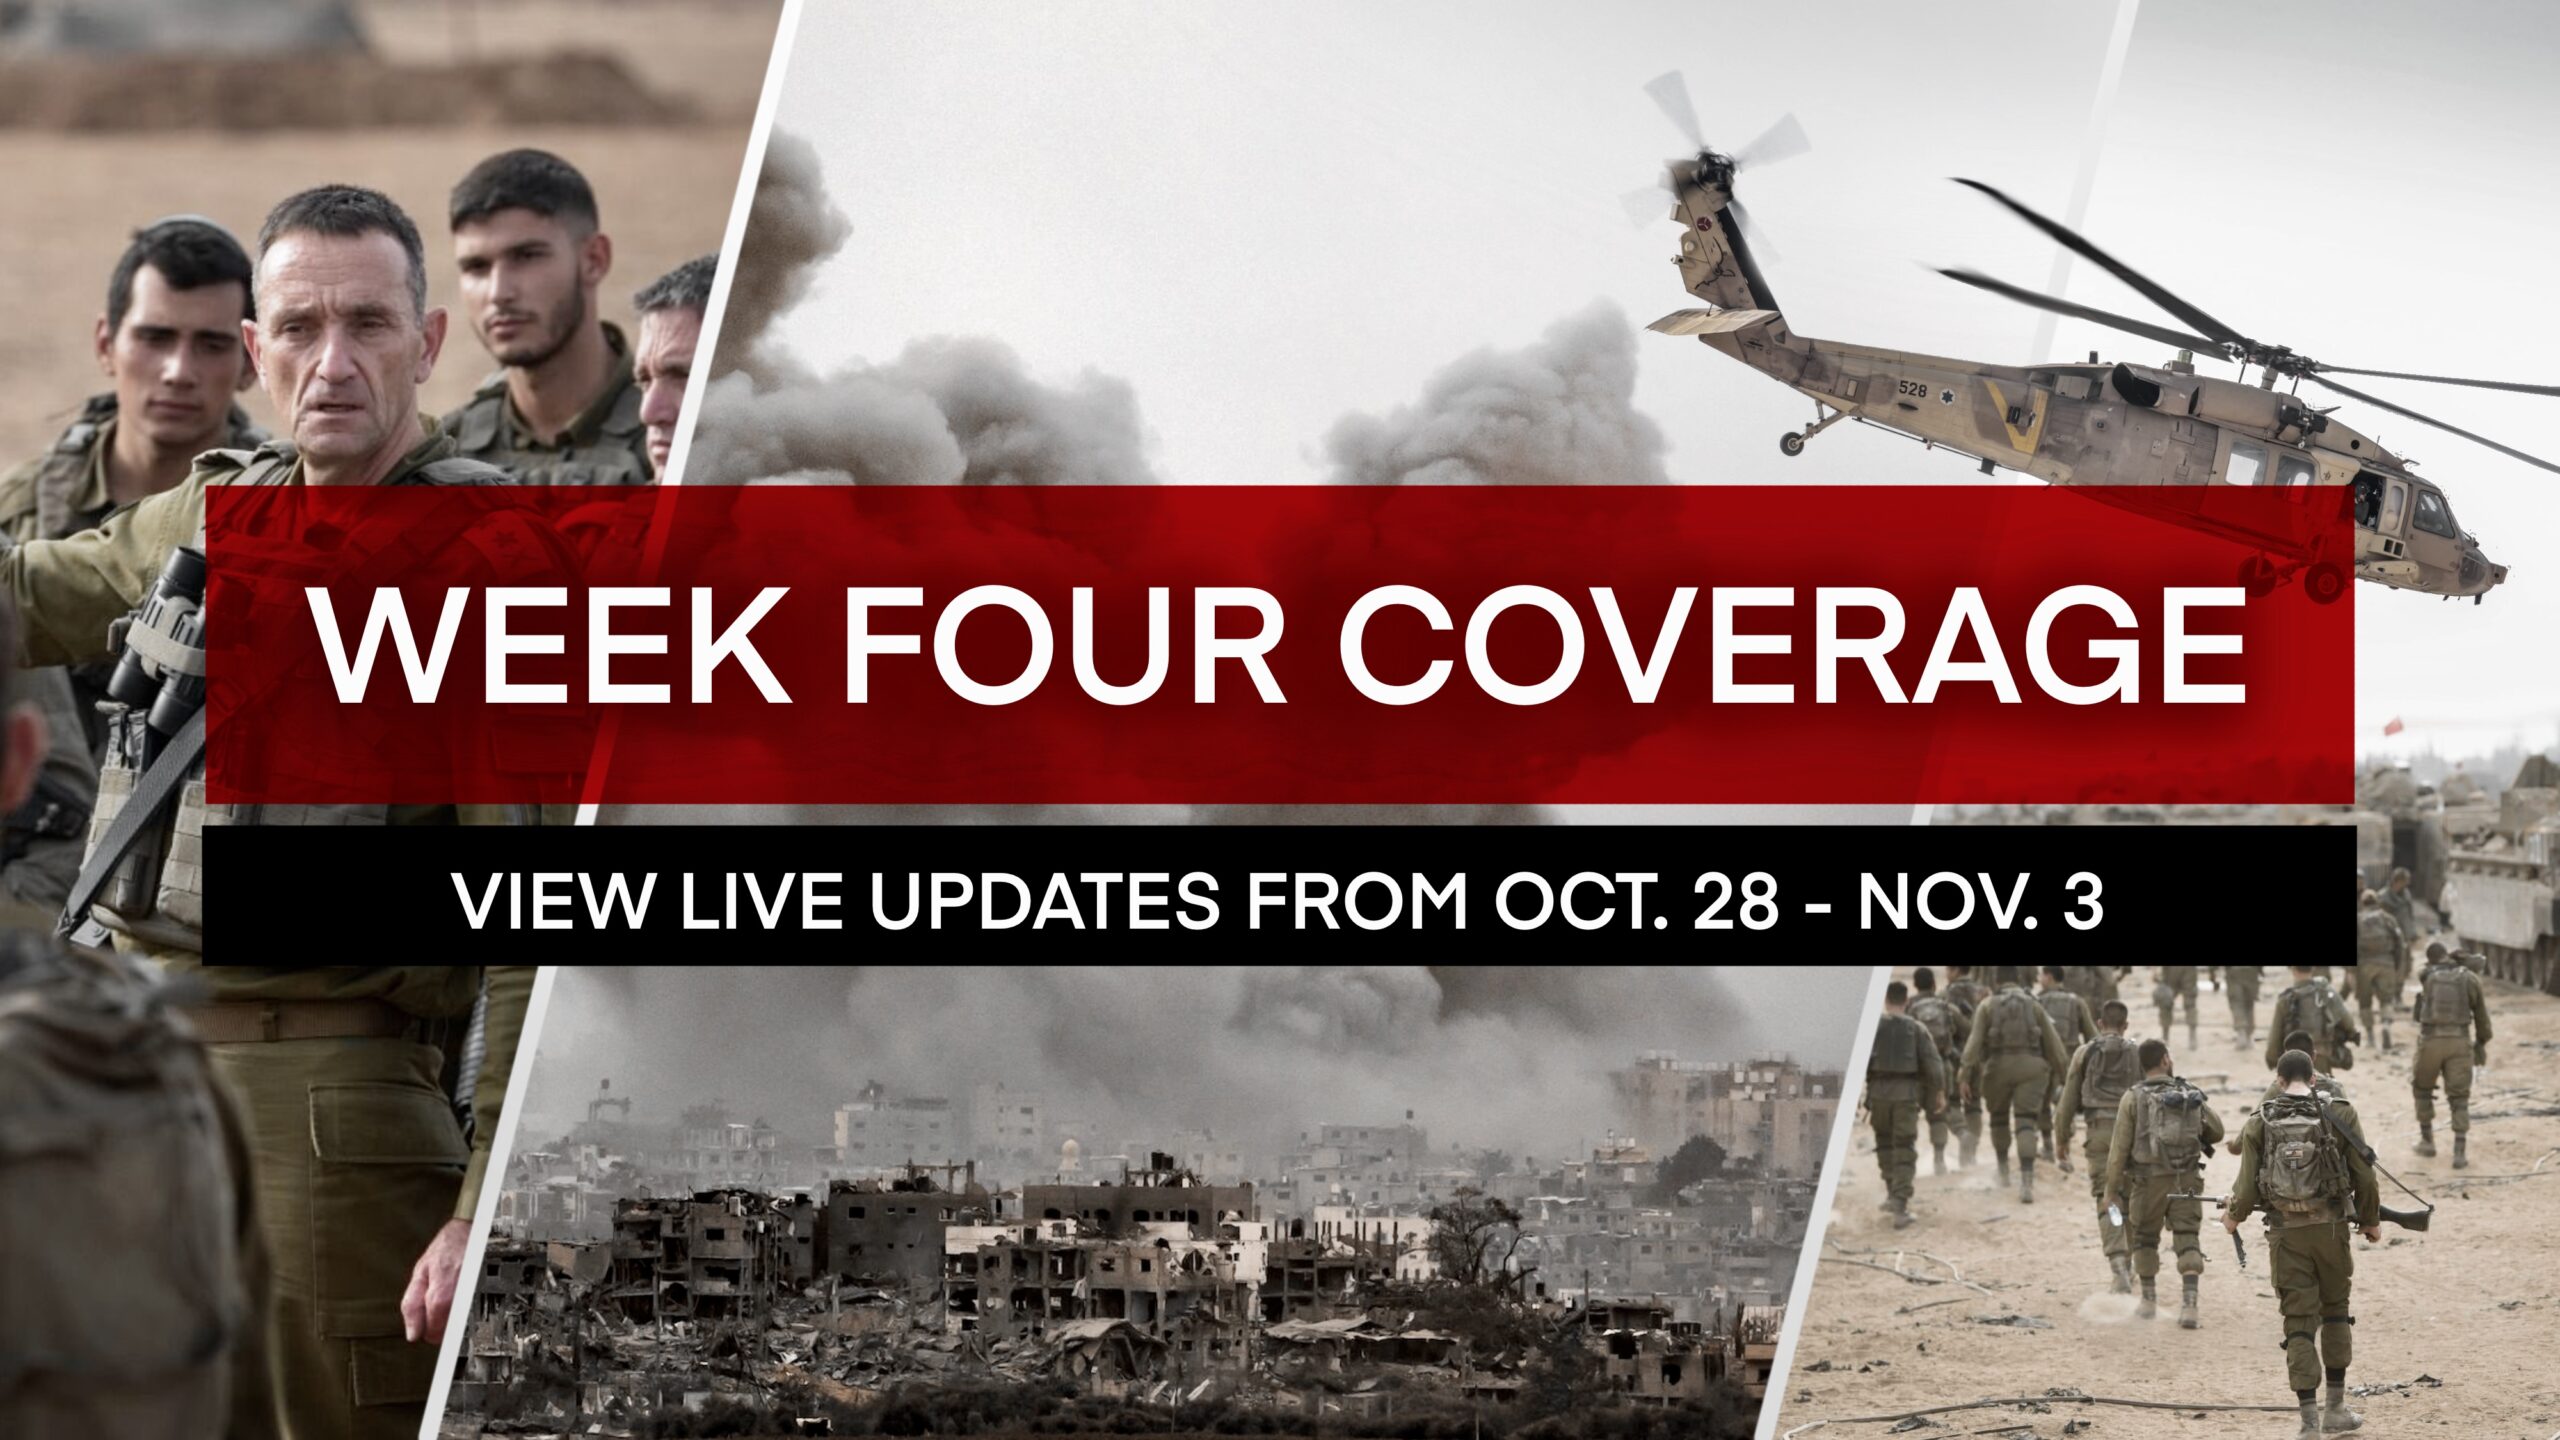 Israel War,Israel At War,Hamas,Israel,October 7